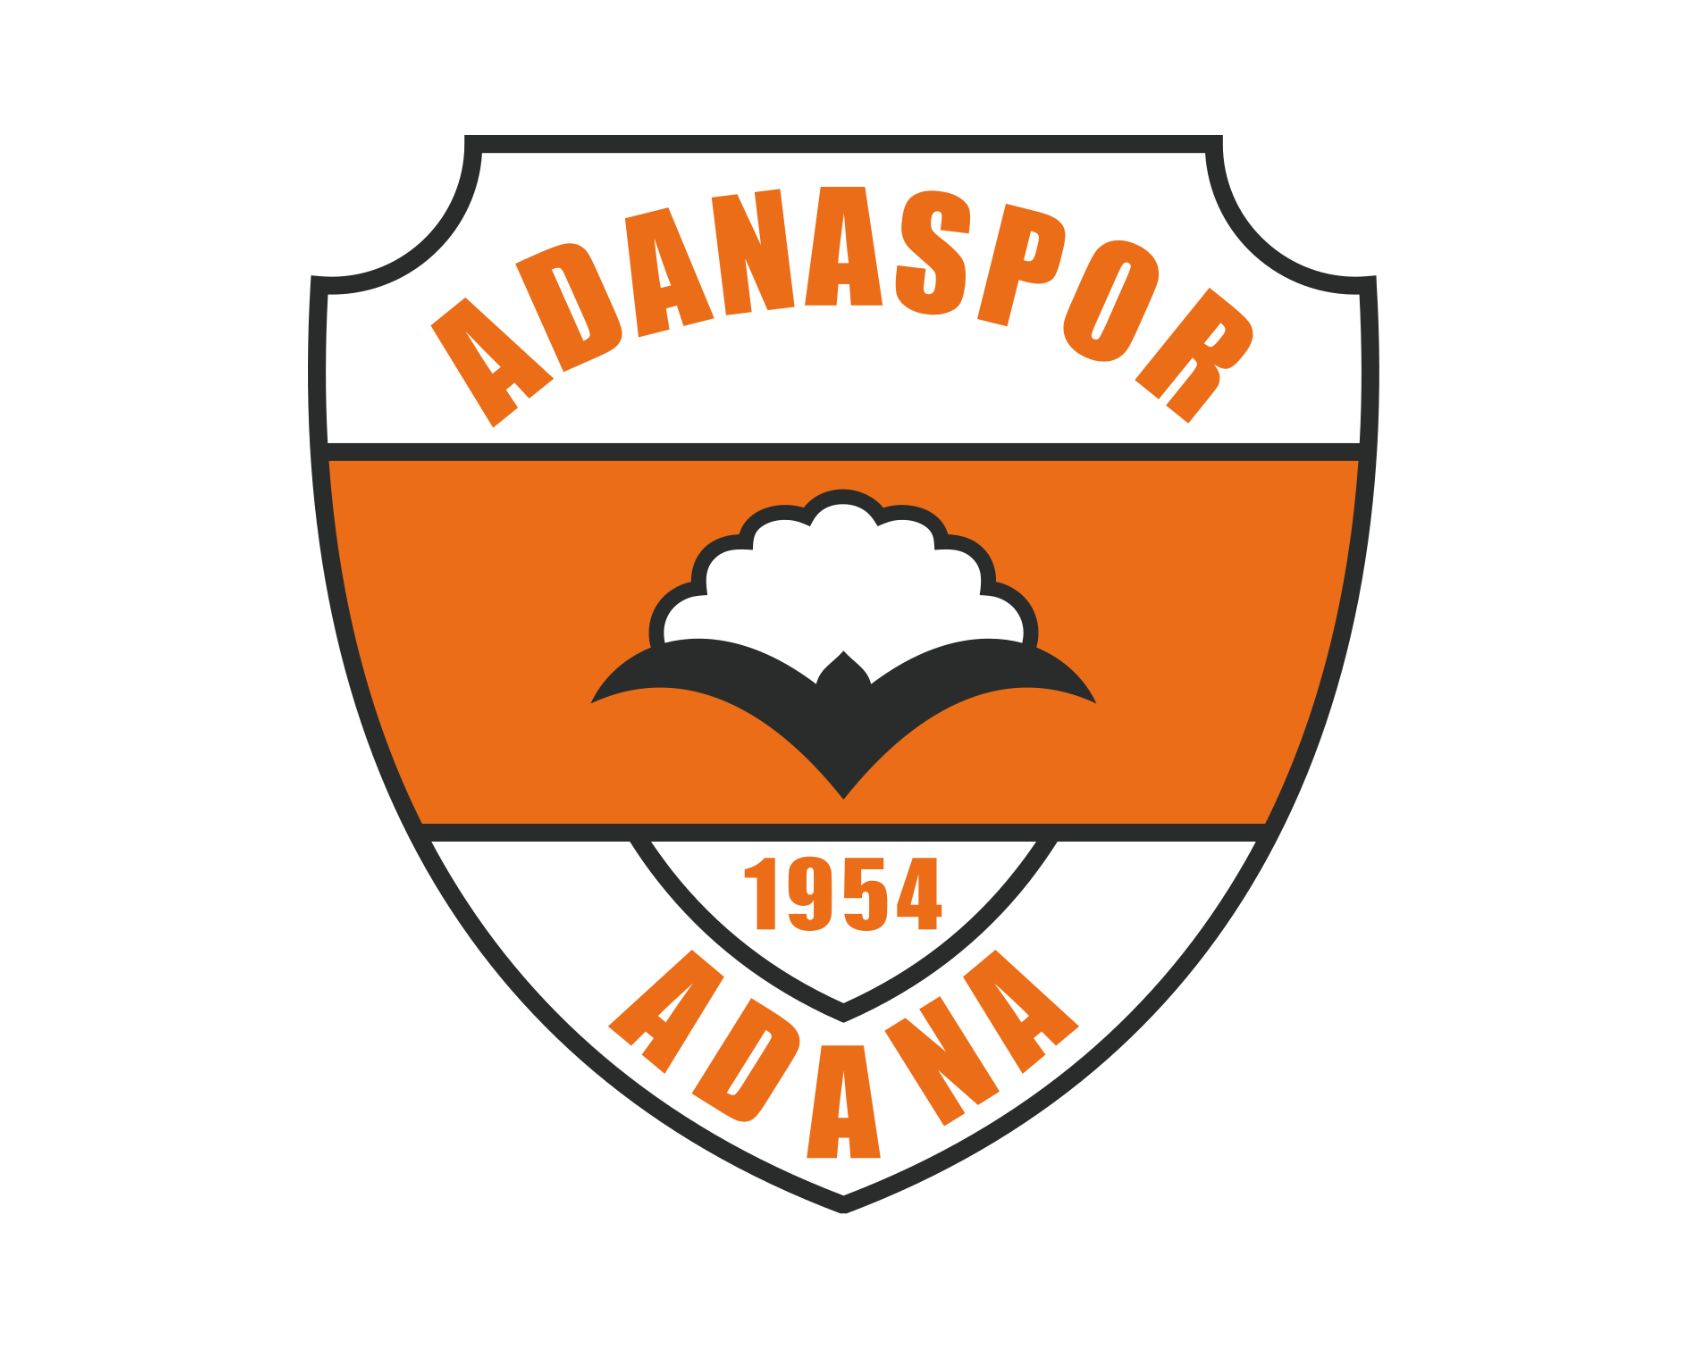 adanaspor-21-football-club-facts